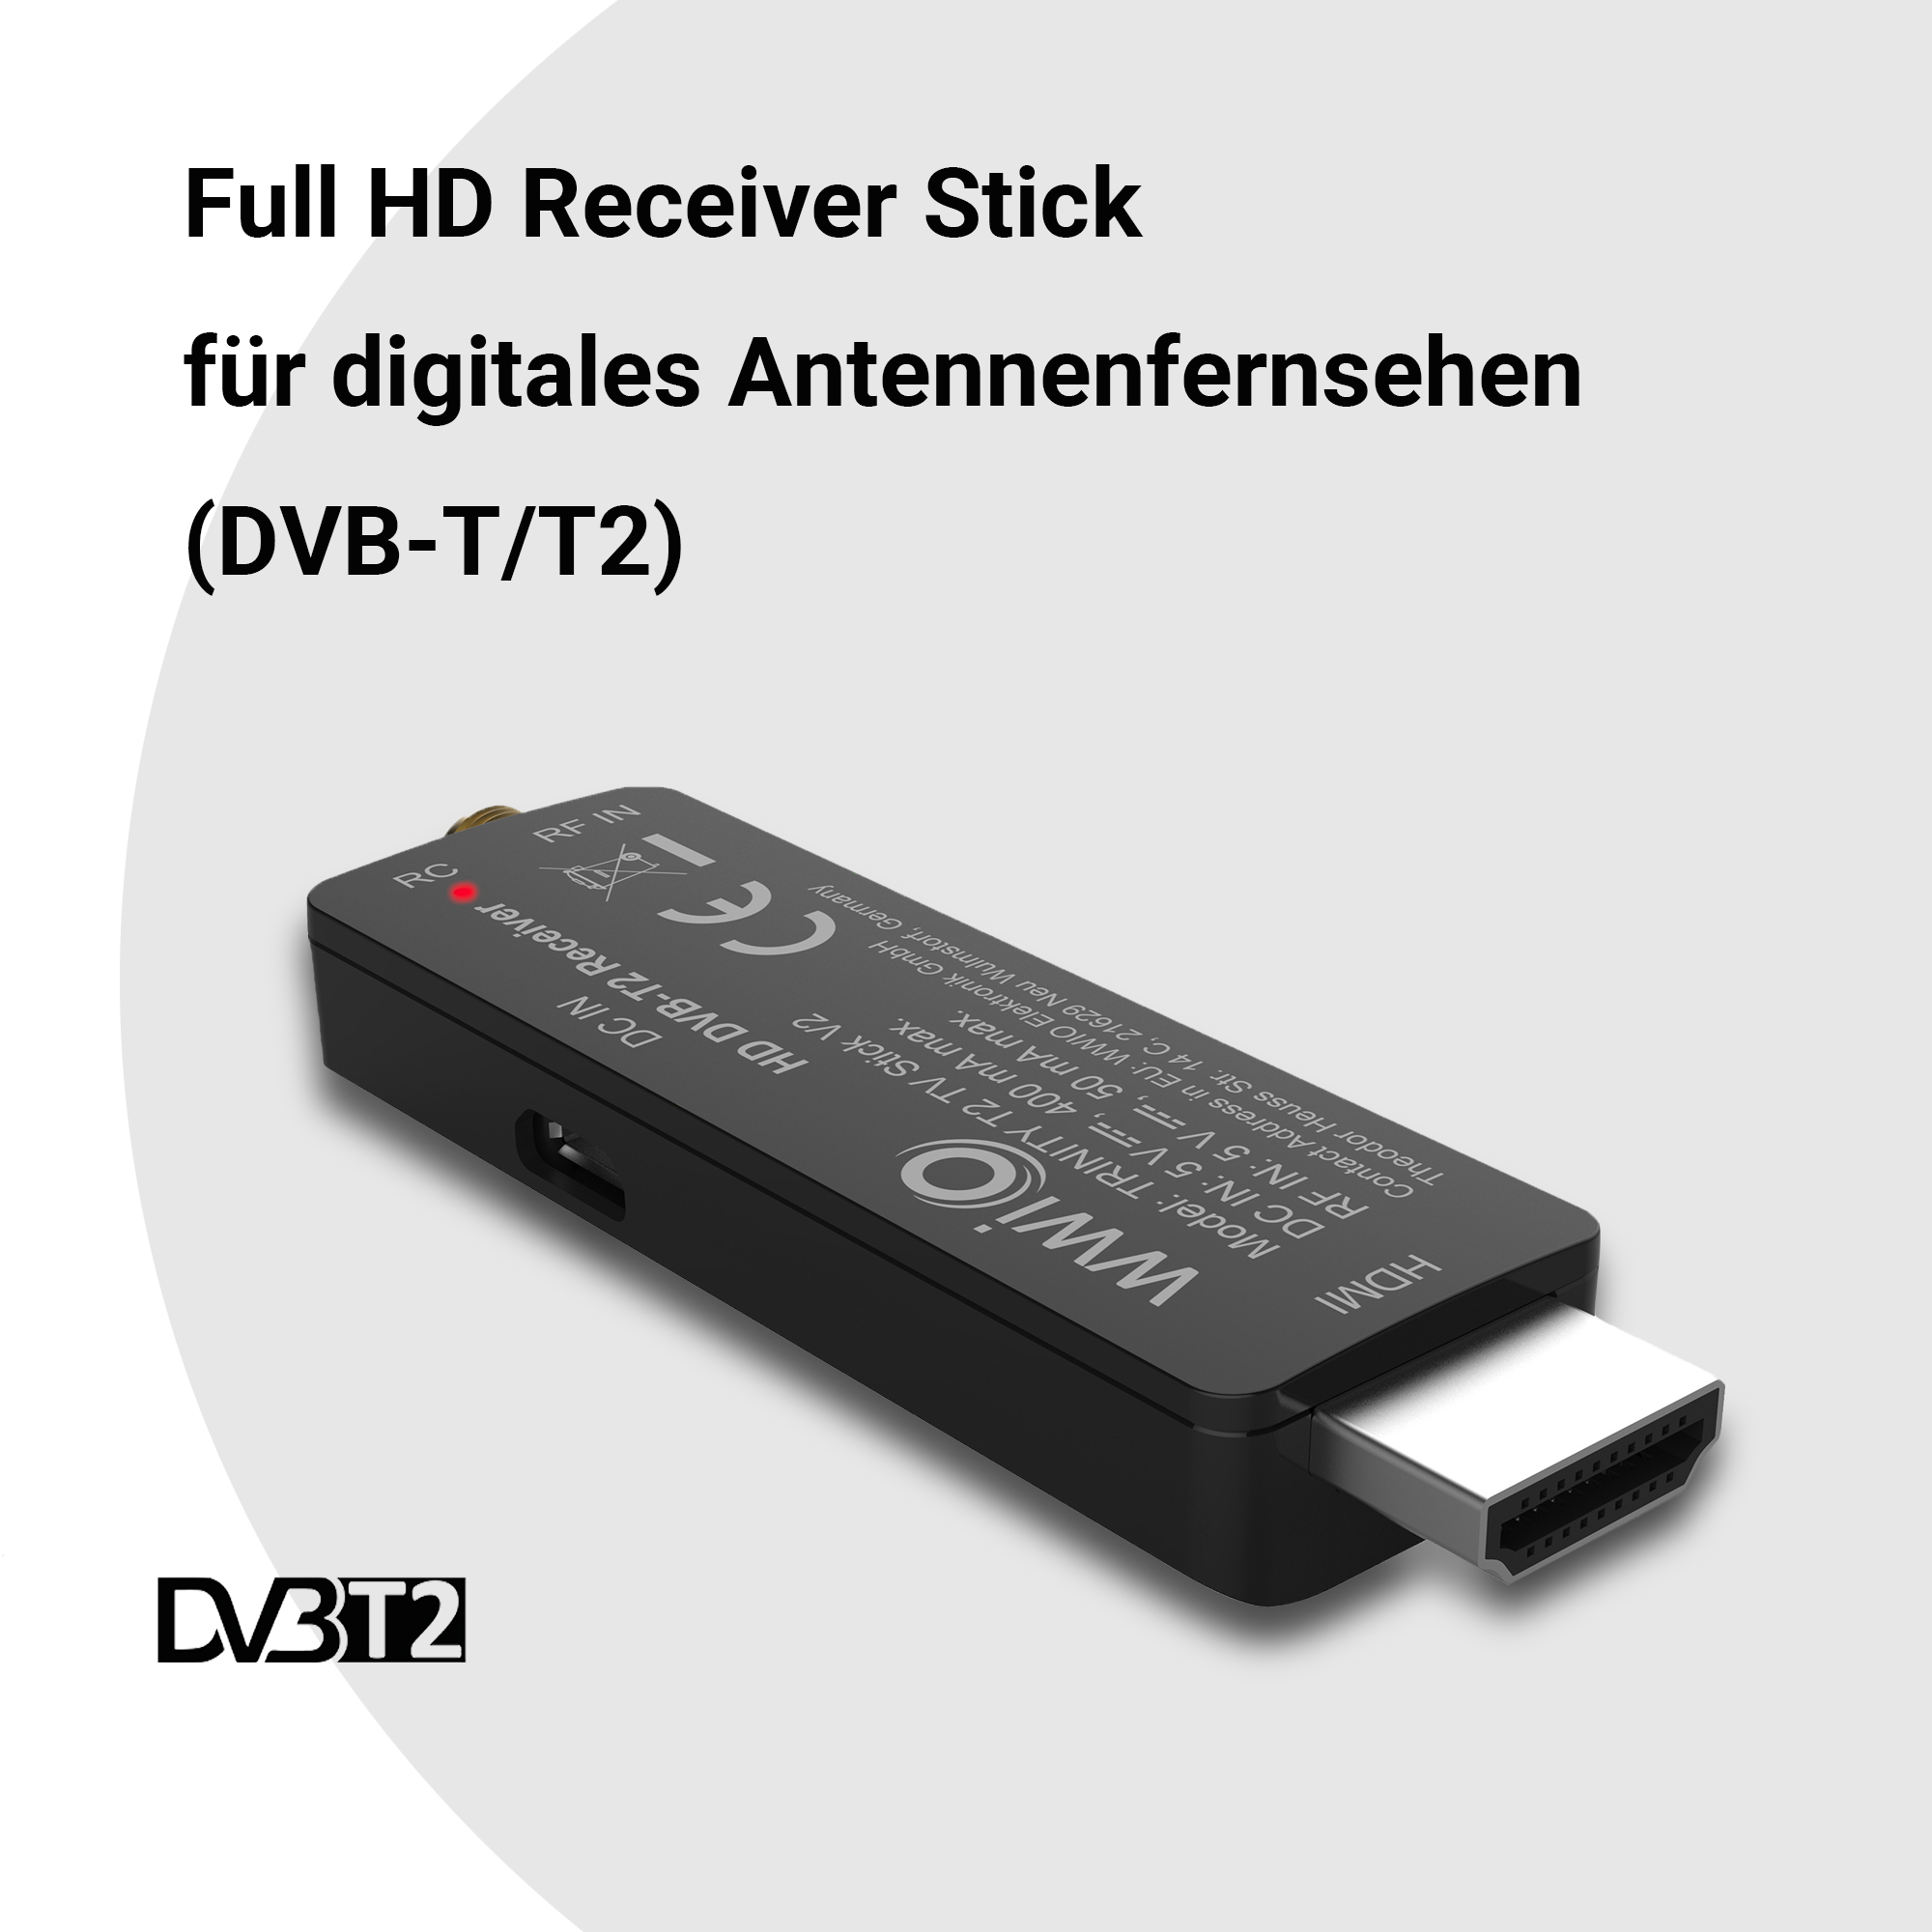 1 DVB-T2 WWIO HD TRINITY Receiver Stick FULL TV Stick 1920x1080 T2 Auflösung bis 2 Receiver WWIO Kompakter in DVB-T2 RCU